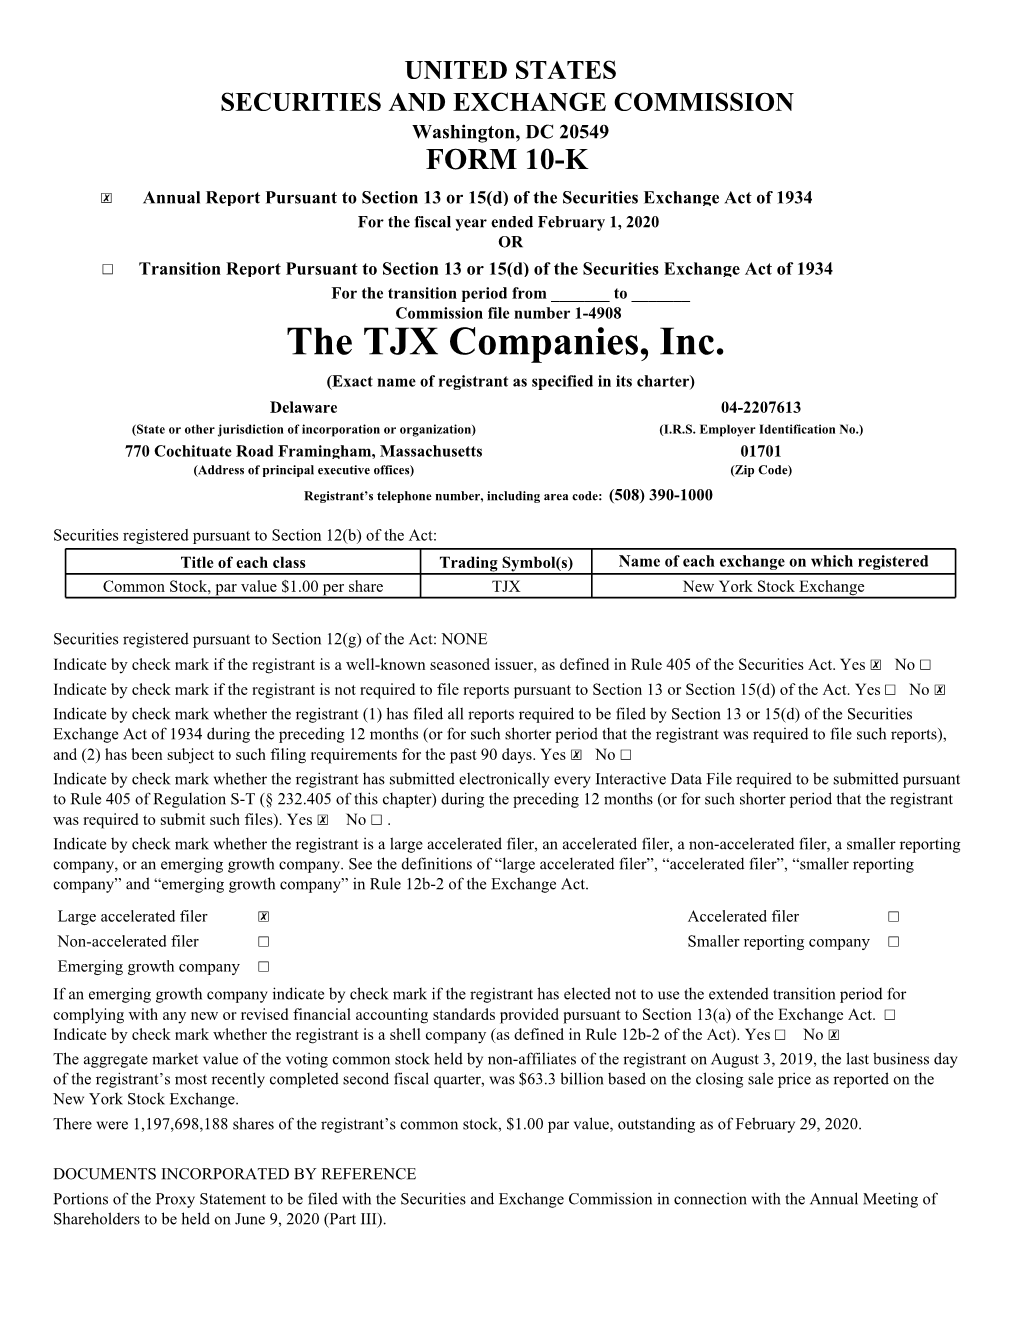 The TJX Companies, Inc. Form 10-K